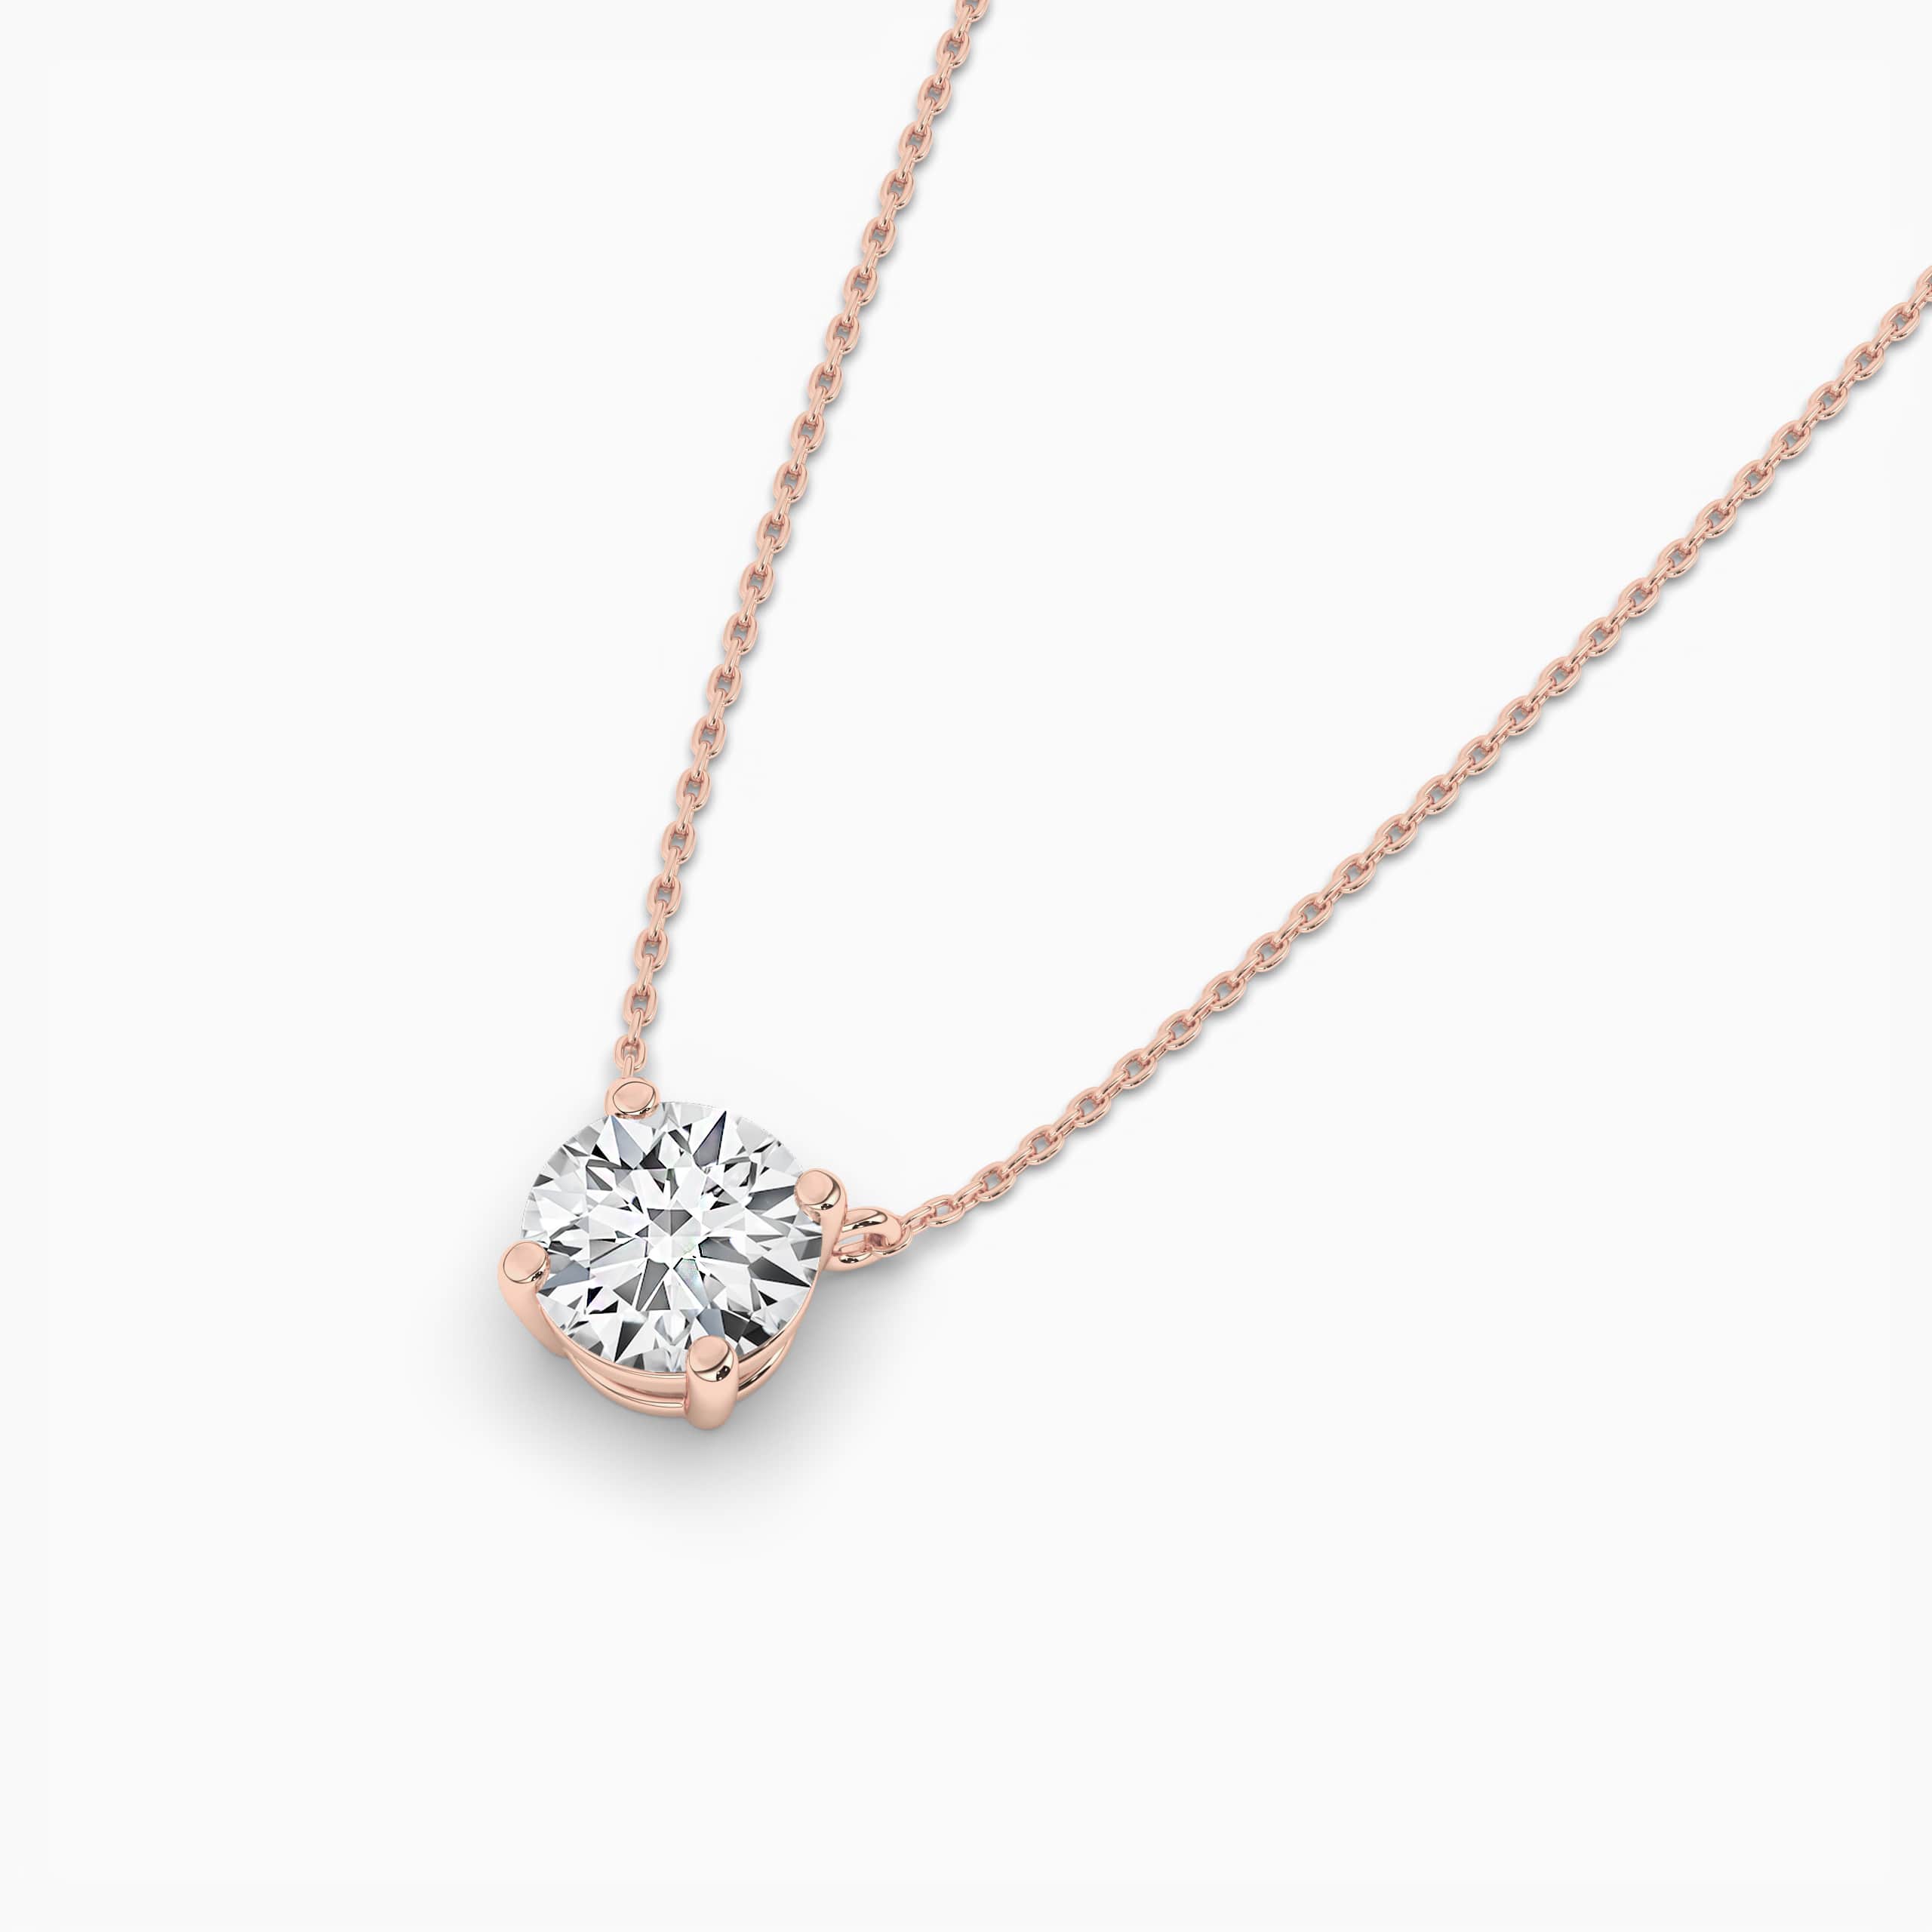 Round Cut Solitaire Diamond Pendant Necklace Rose Gold